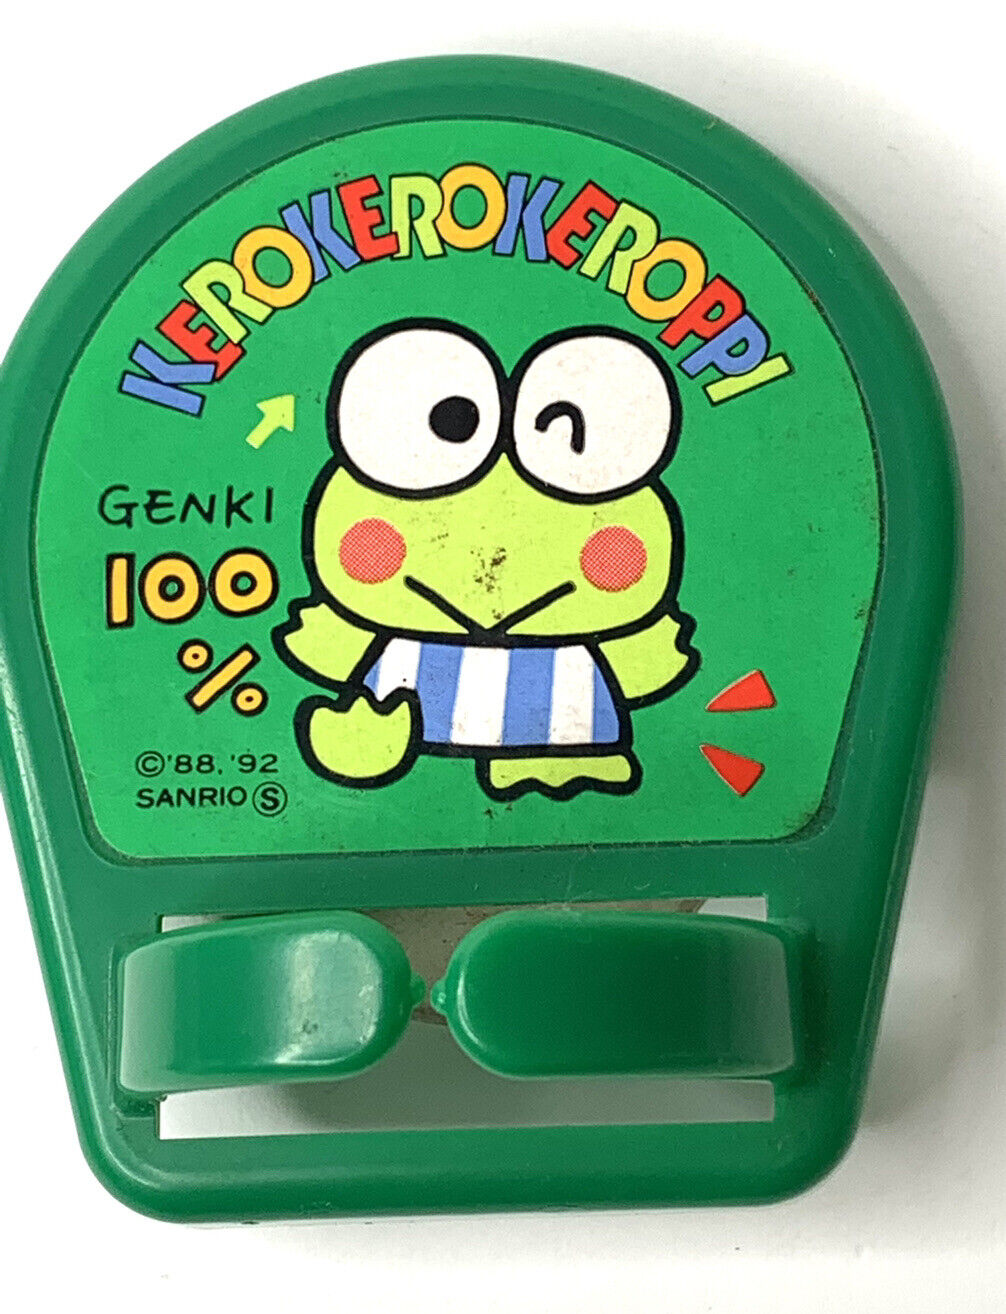 Sanrio Kero Keroppi Frog Suction Cup Holder Decor Vintage 1992